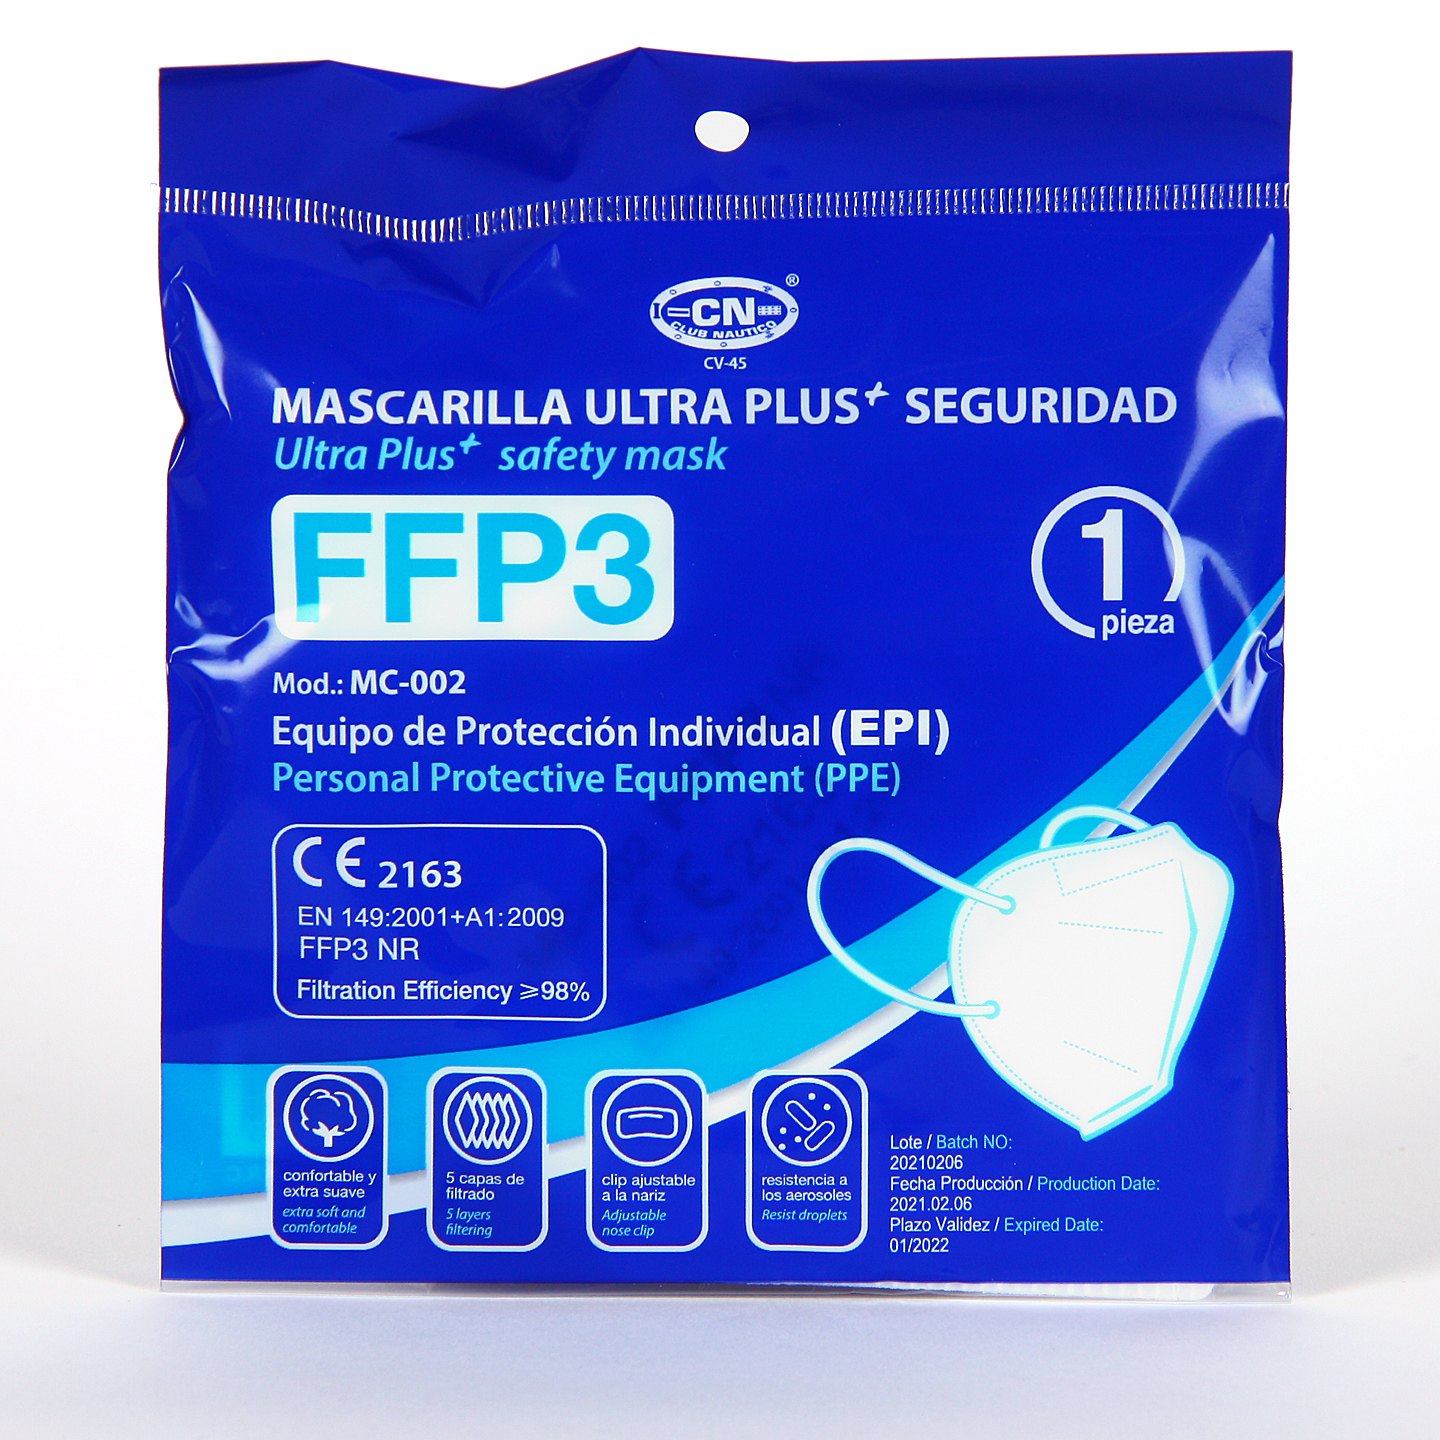 Mascarilla FFP3 - CE 2163